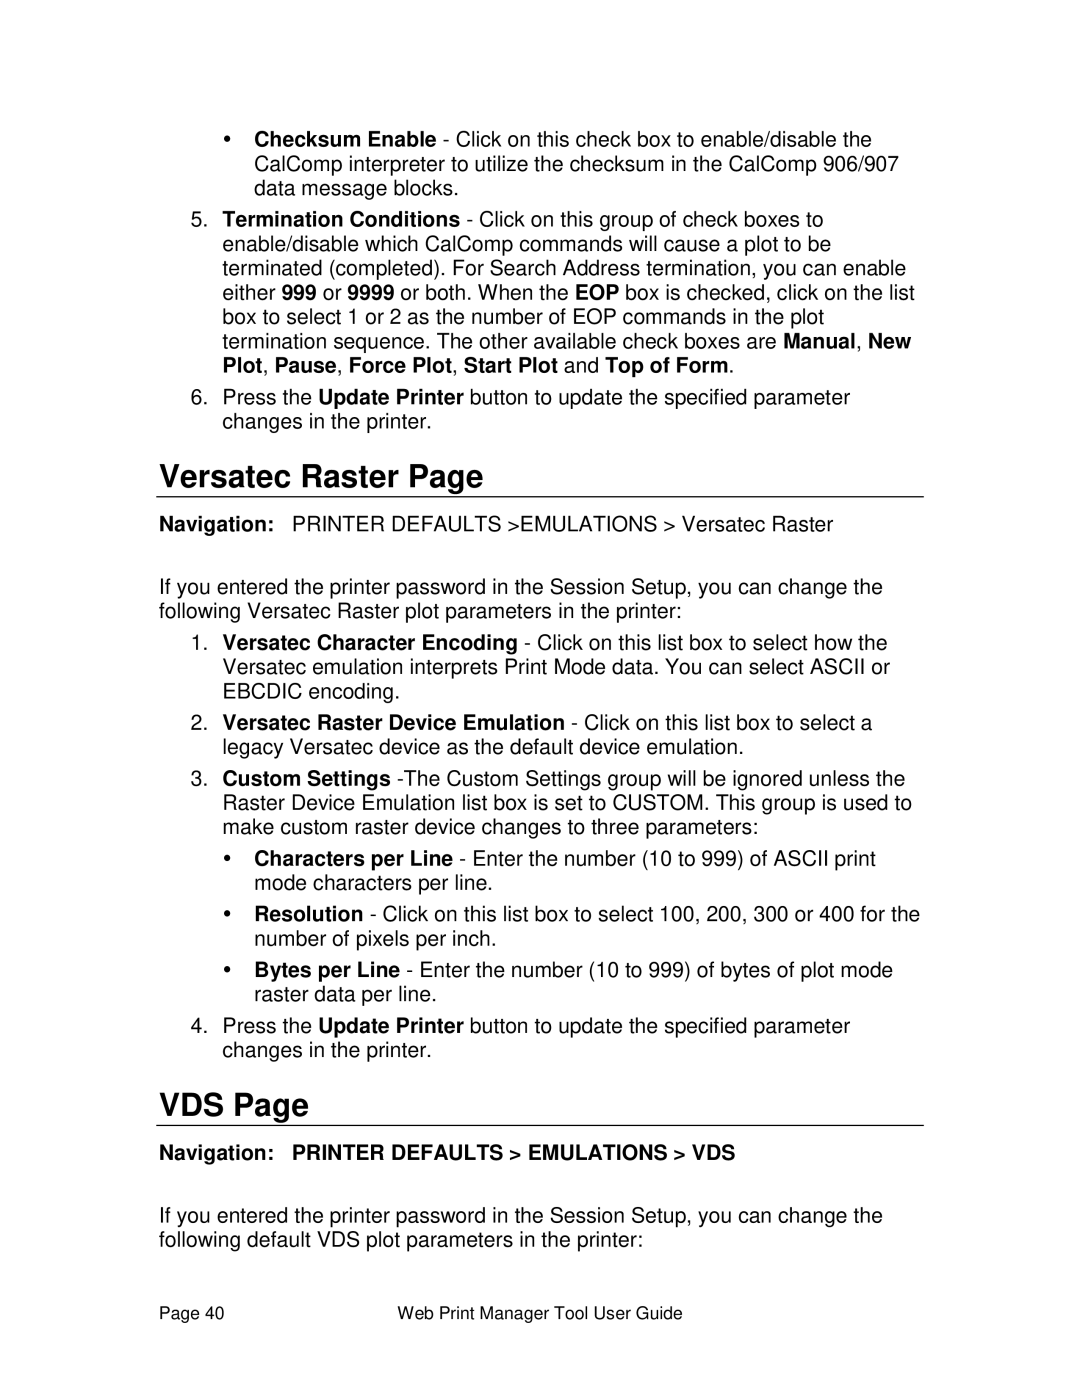 Xerox 701P39116 manual Versatec Raster, Vds, Navigation Printer Defaults Emulations VDS 